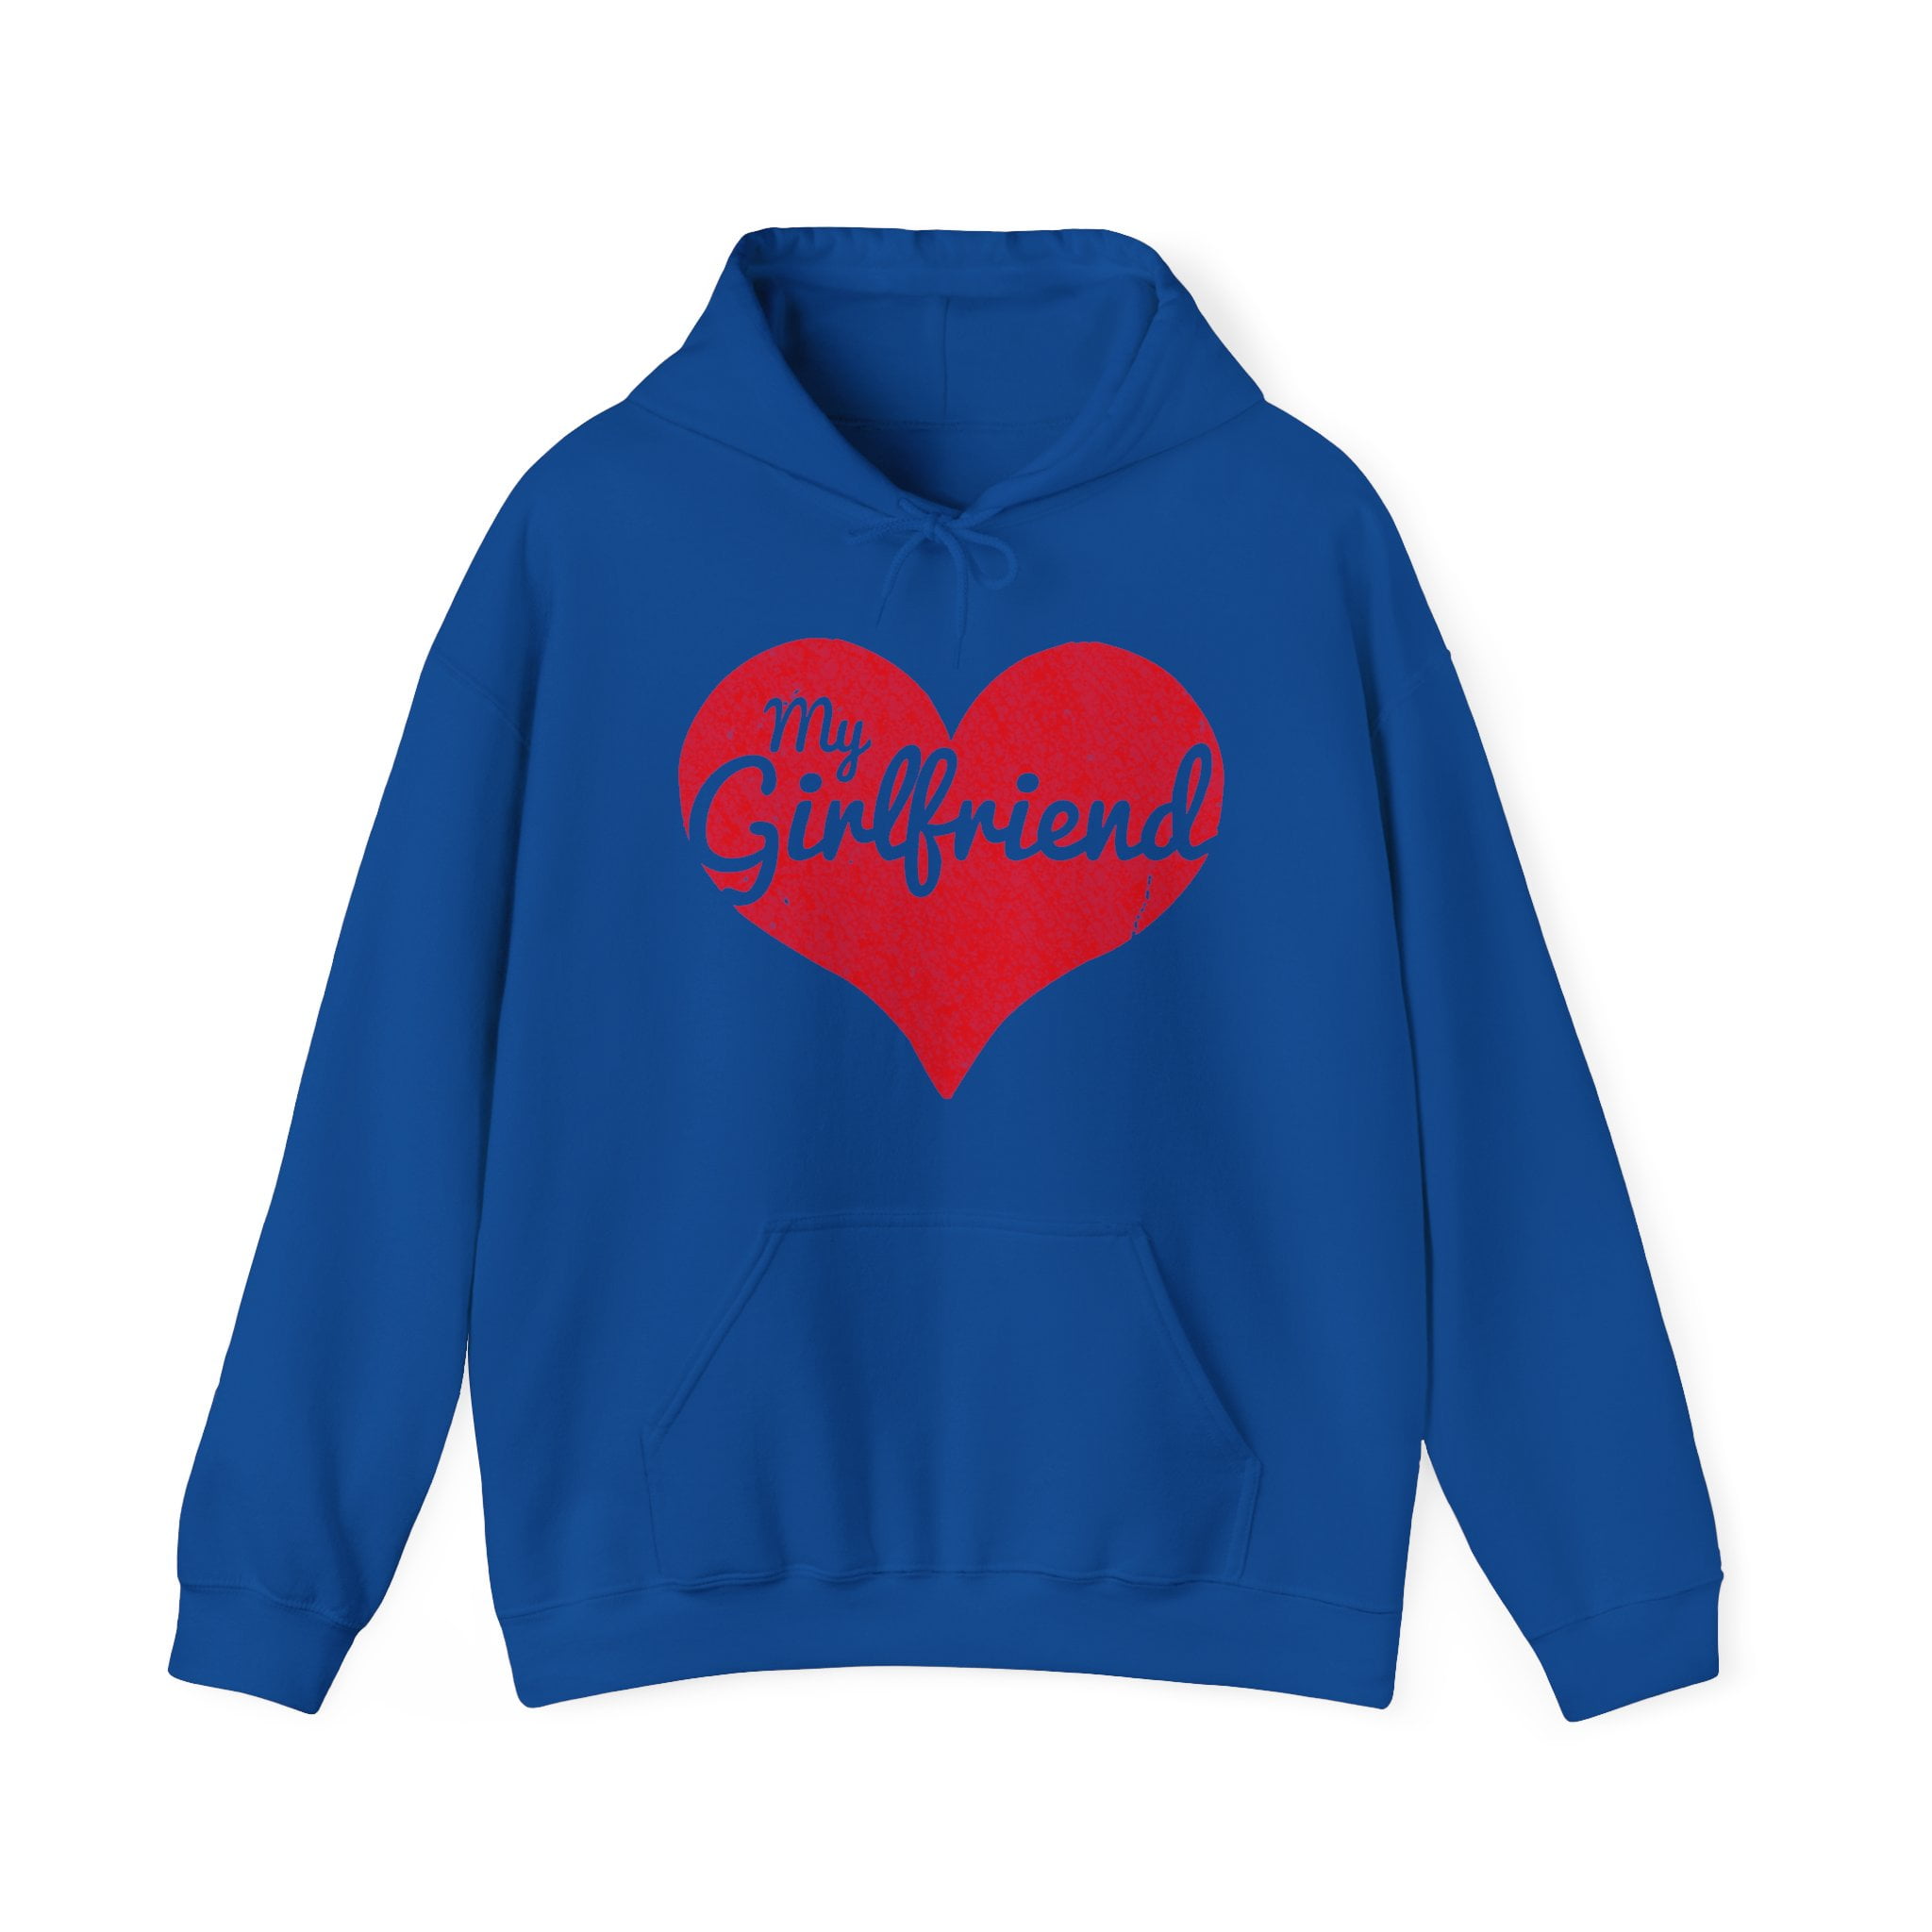 I Love My Girlfriend Graphic Hoodie Sweatshirt, Sizes S-5XL